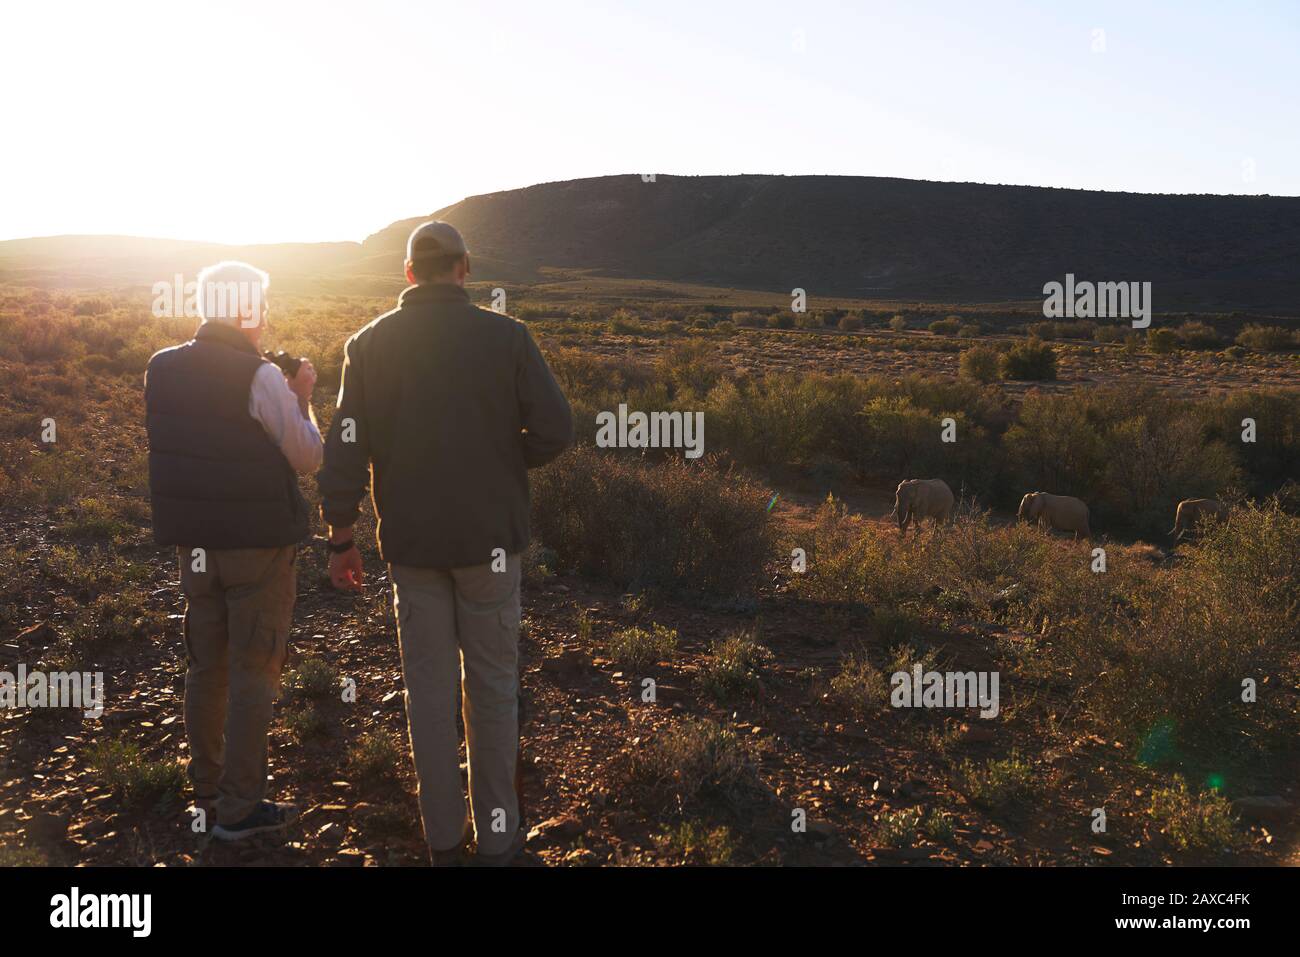 Men on safari watching elephants in sunny grassland South Africa Stock Photo